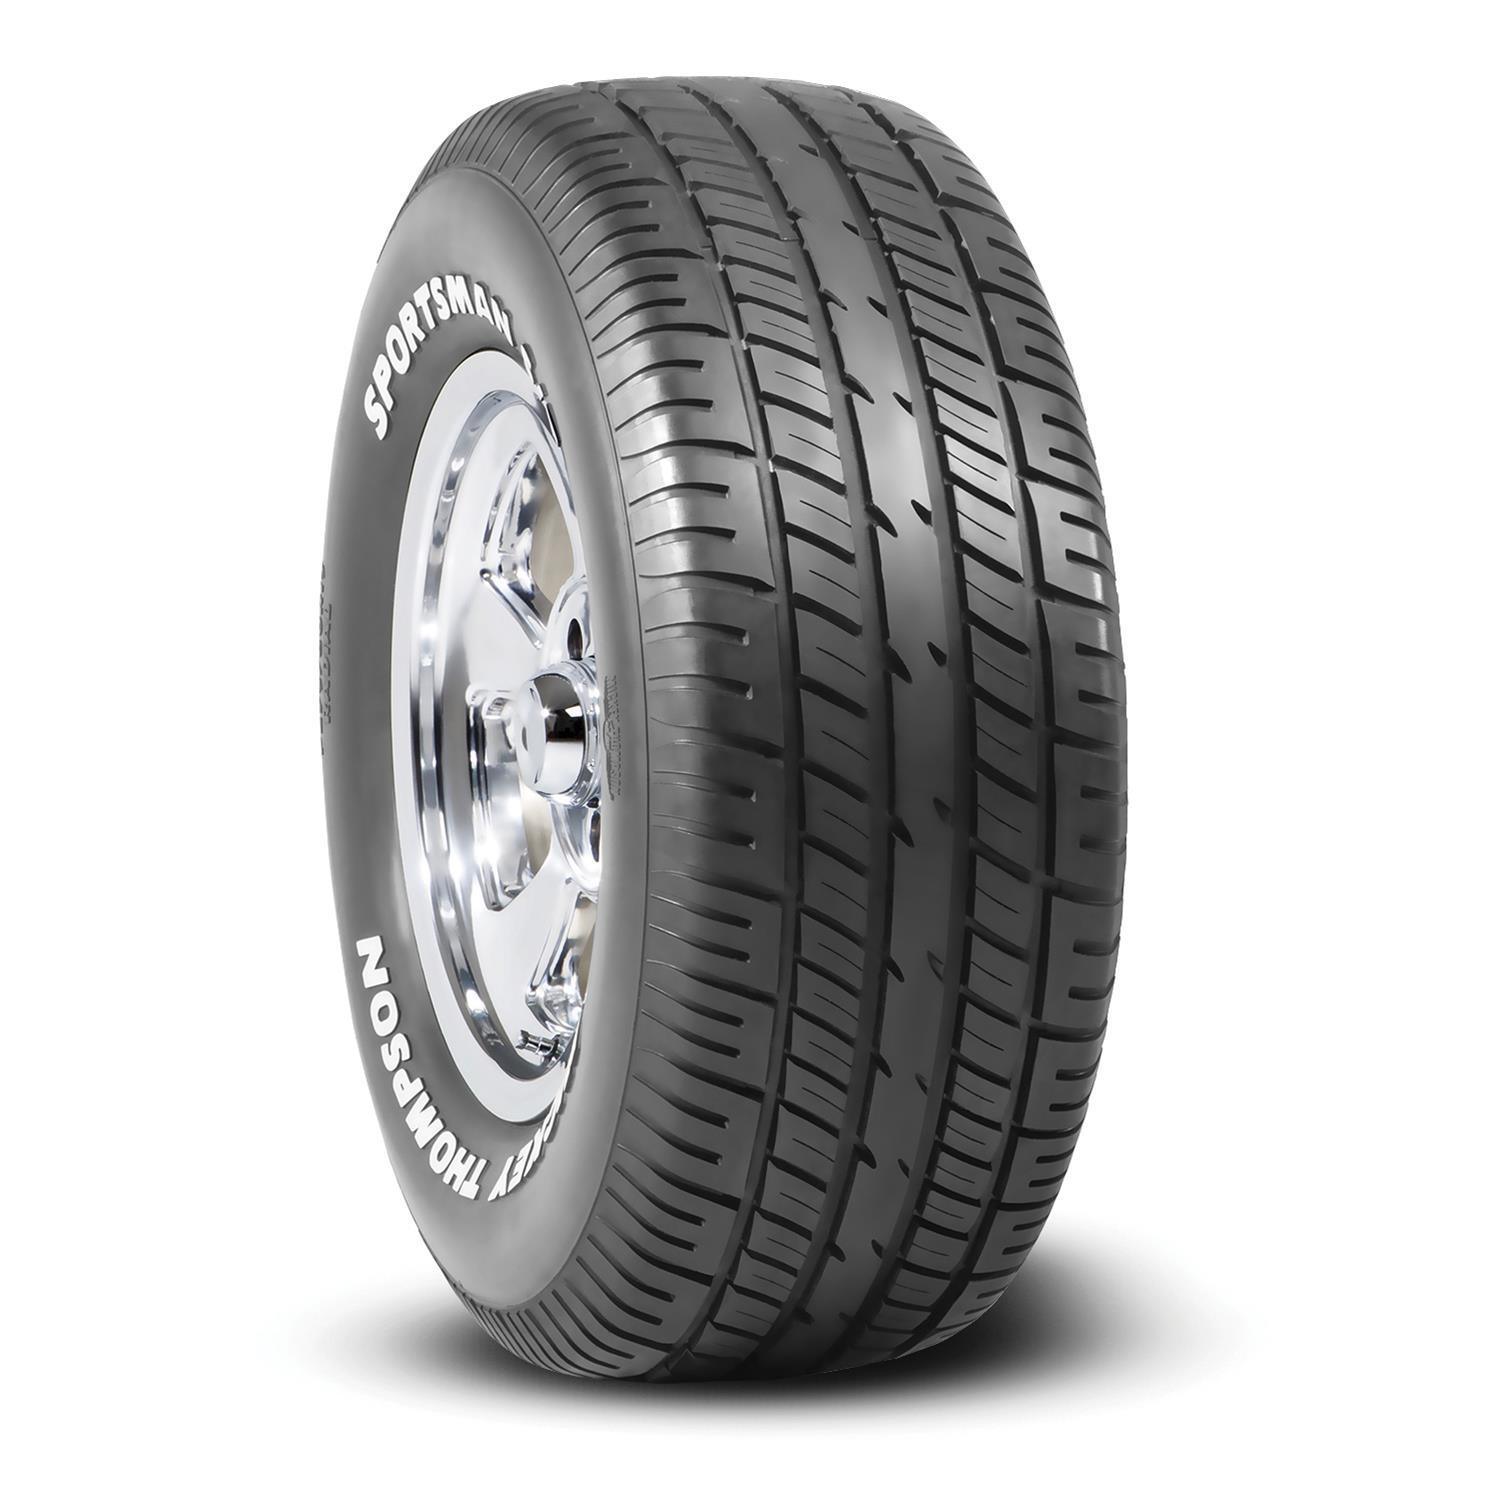 P255/60R15 Sportsman S/T Tire - Burlile Performance Products